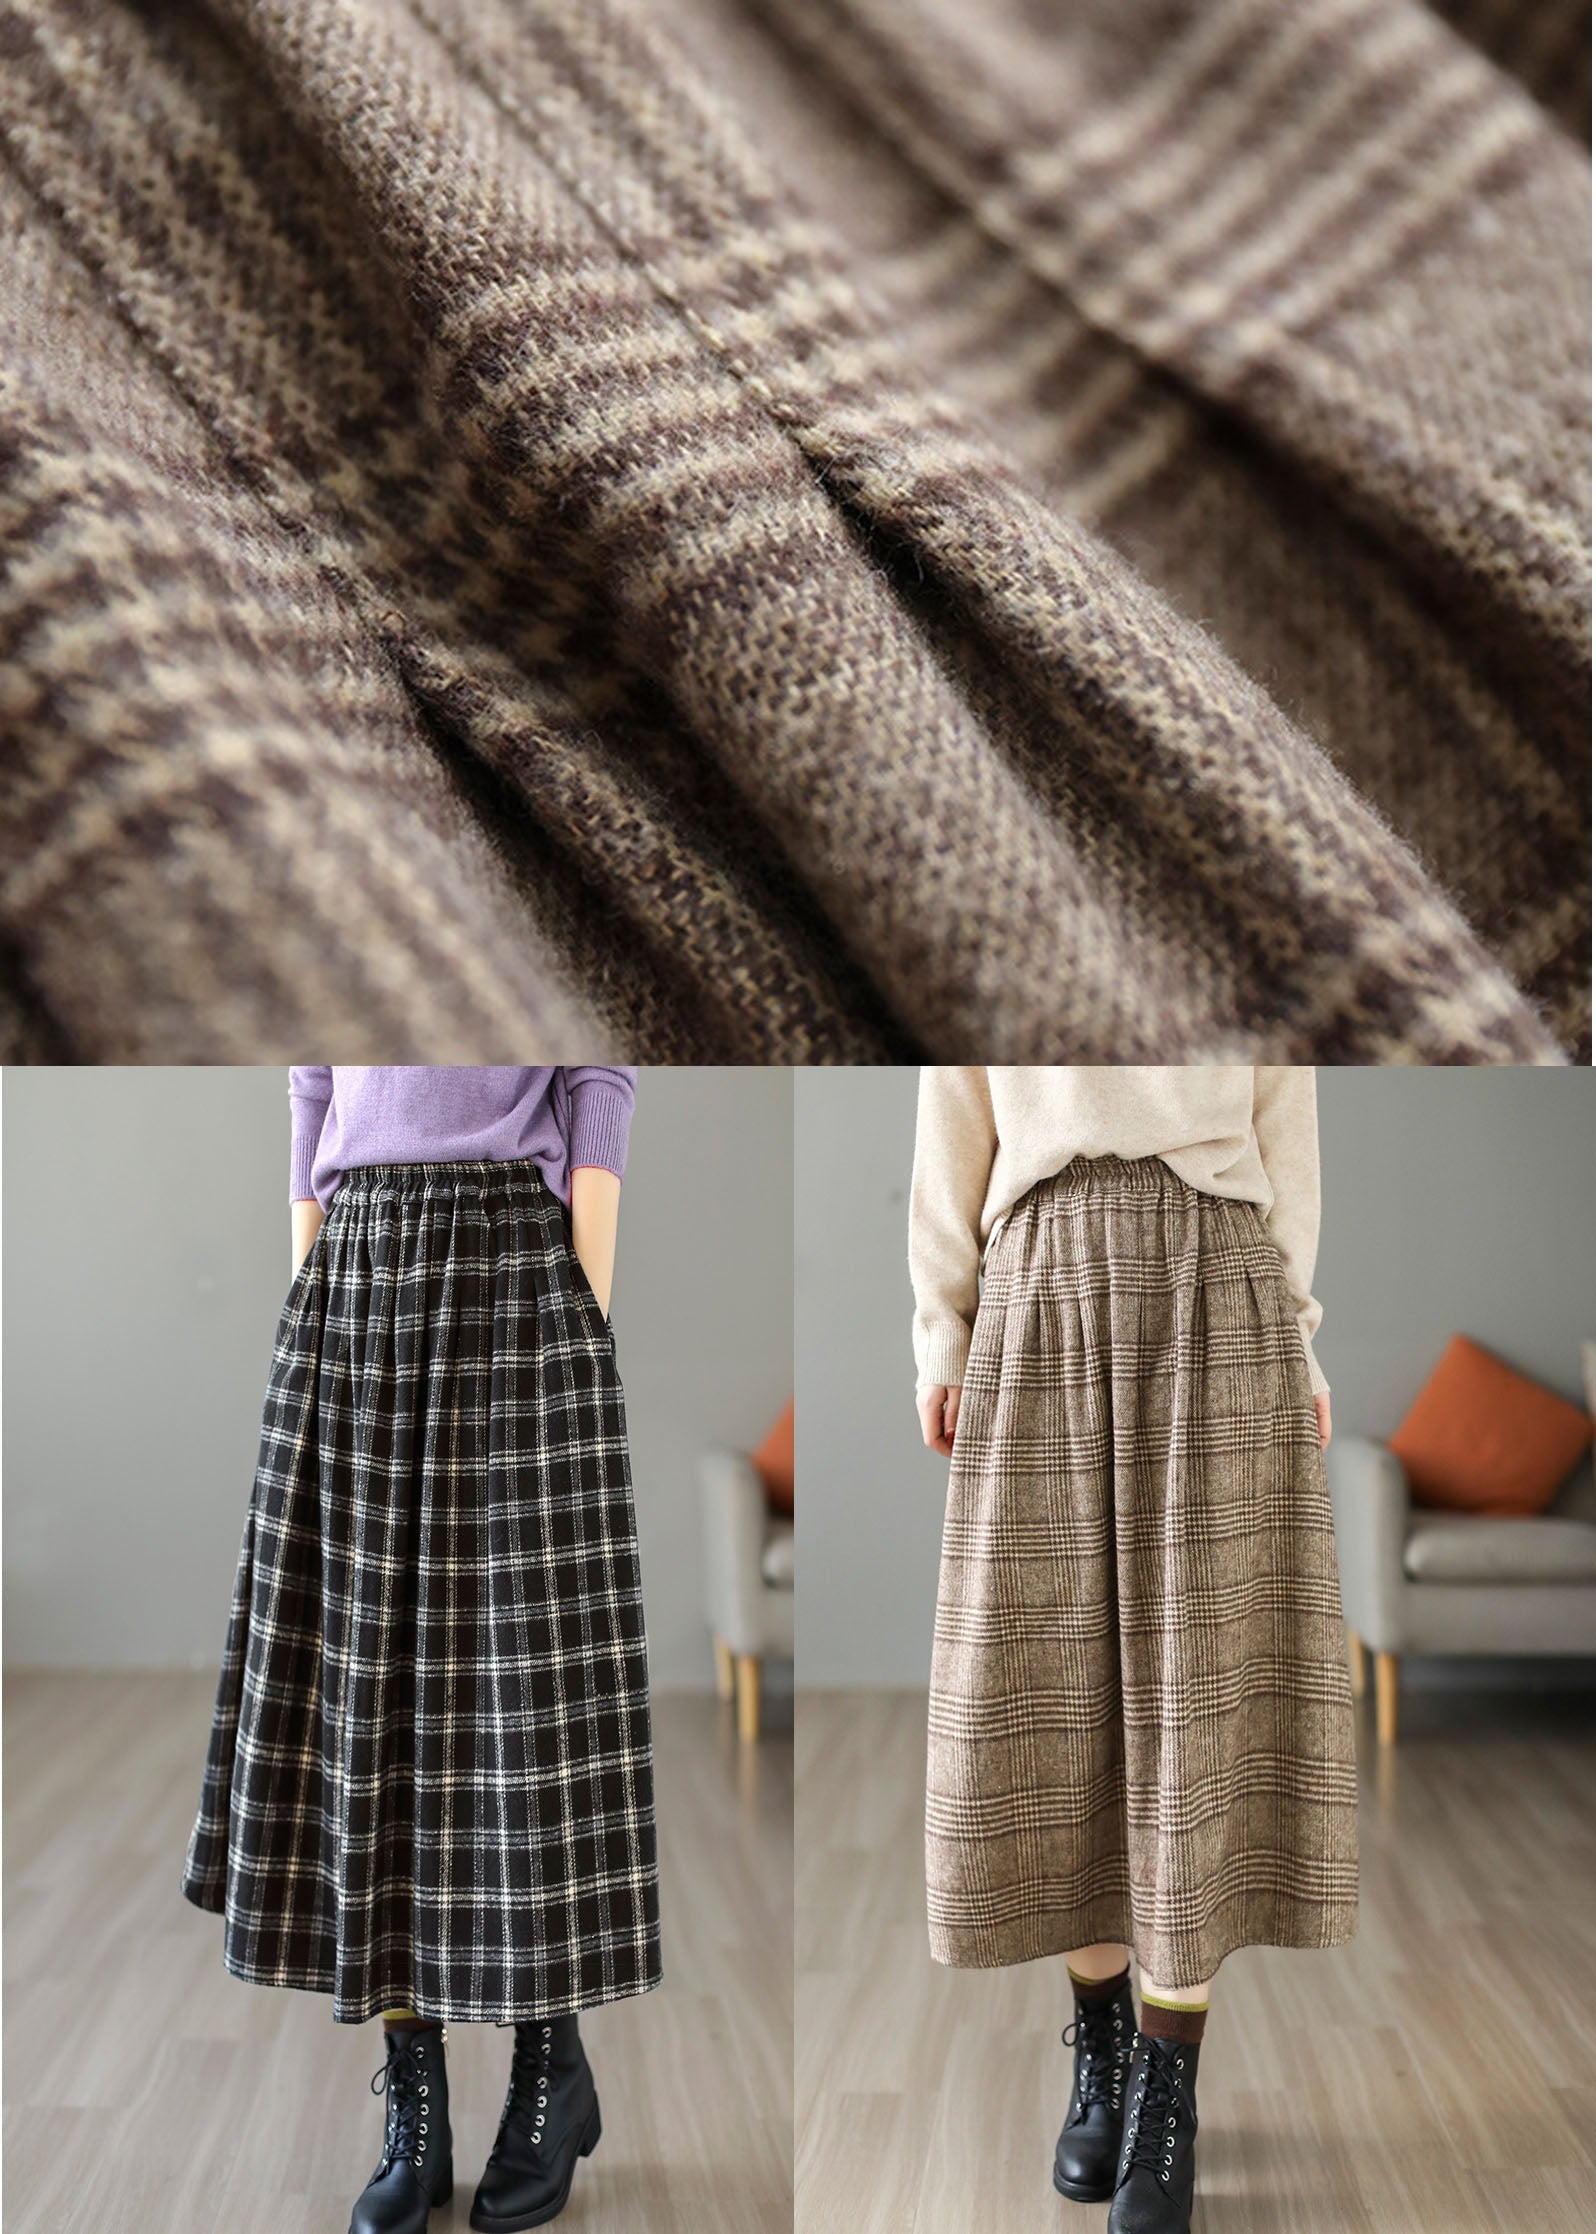 Chic Black Elastic Waist Plaid Cotton A Line Skirt Spring TG1034 - fabuloryshop